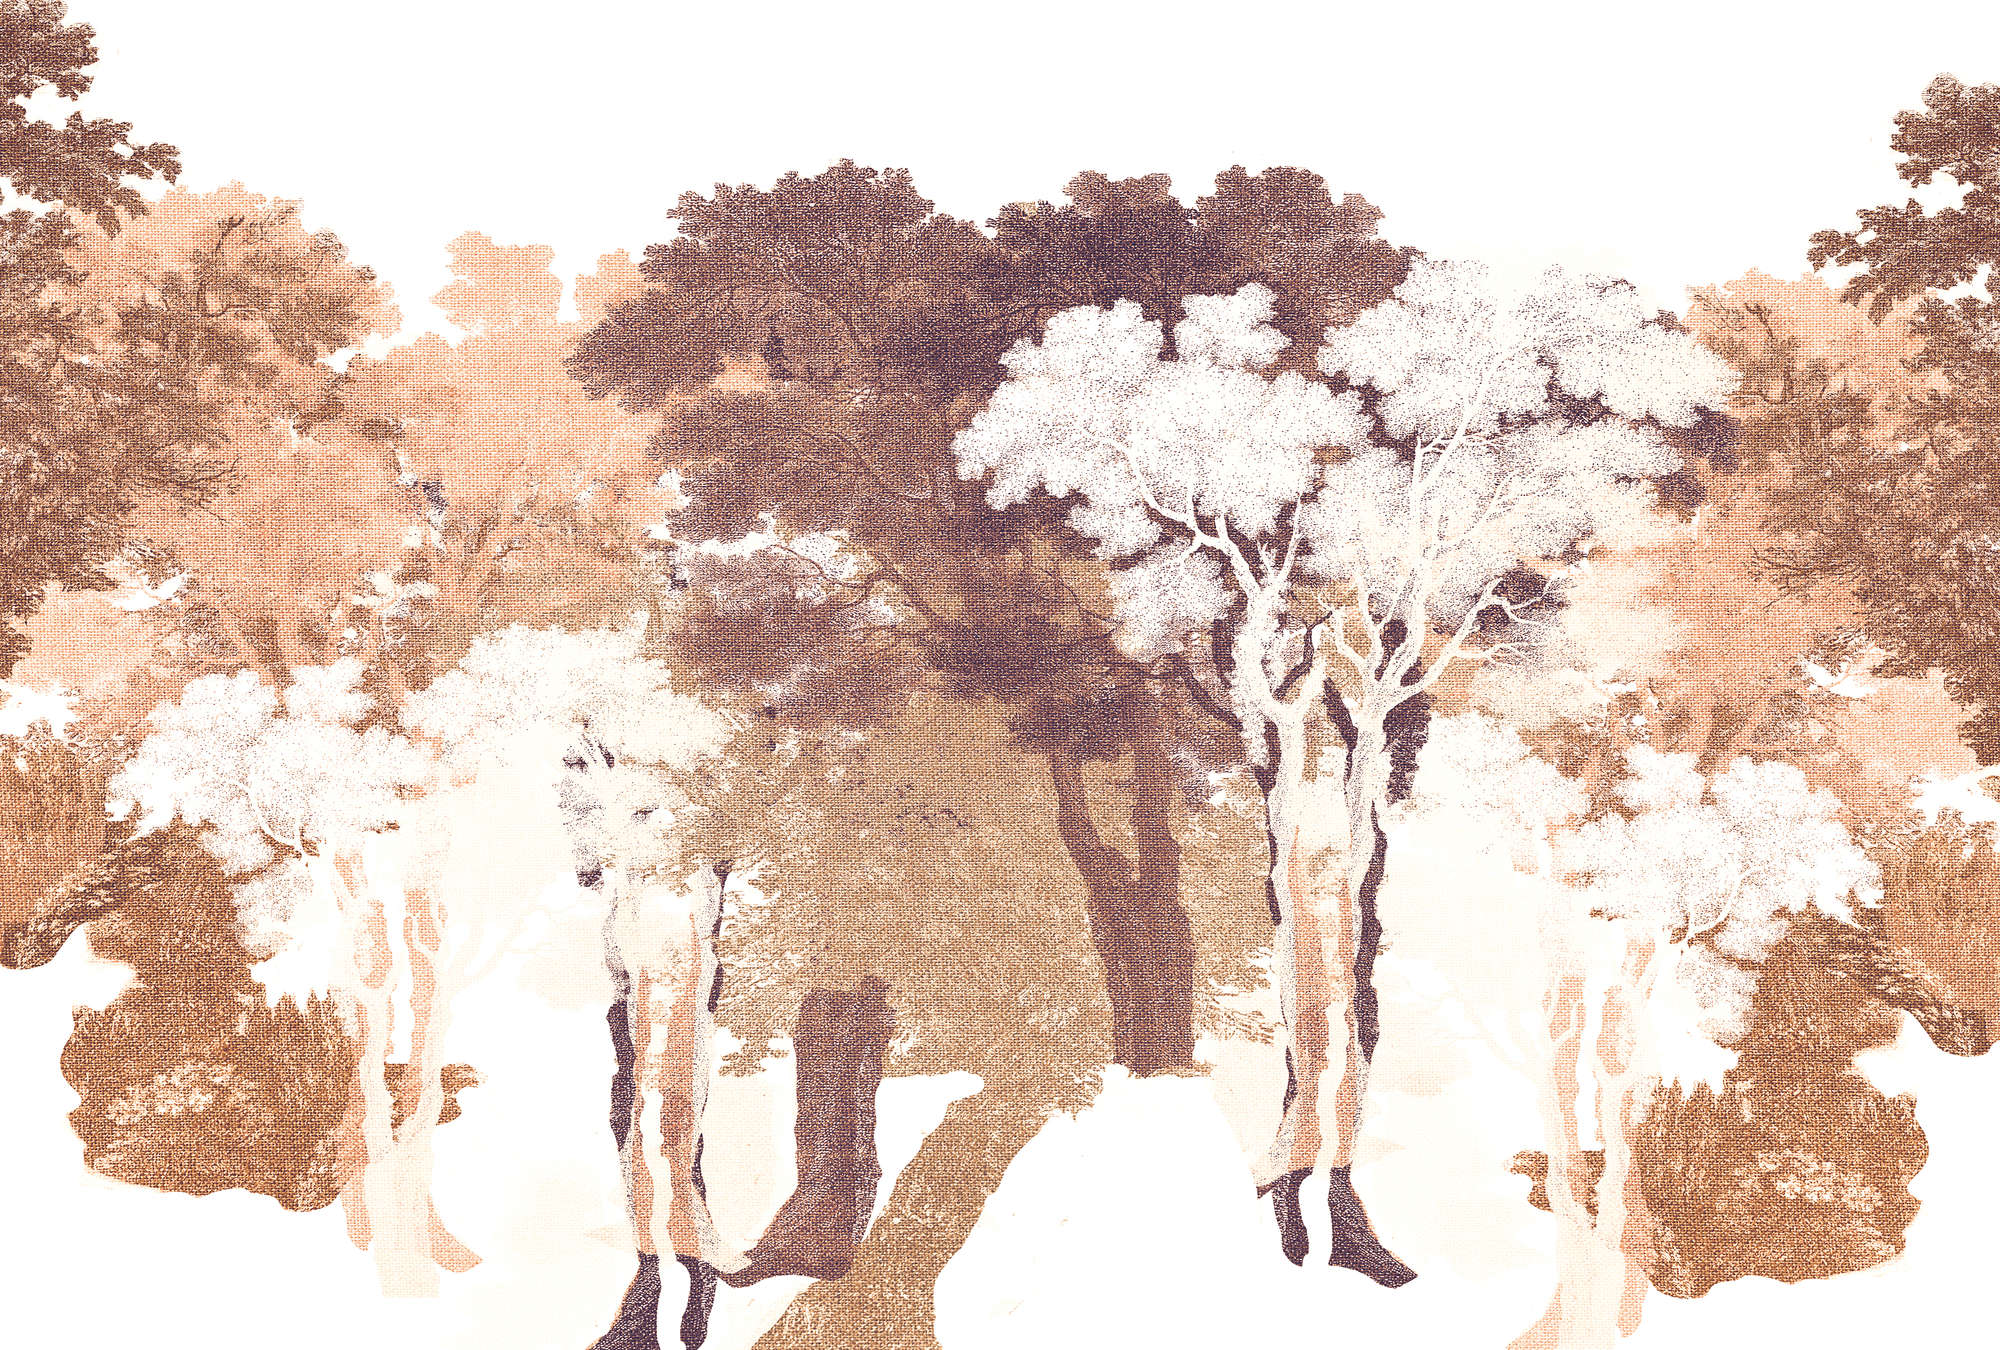             Fotomural Árboles, aspecto textil y paisaje forestal - Naranja, blanco, gris
        